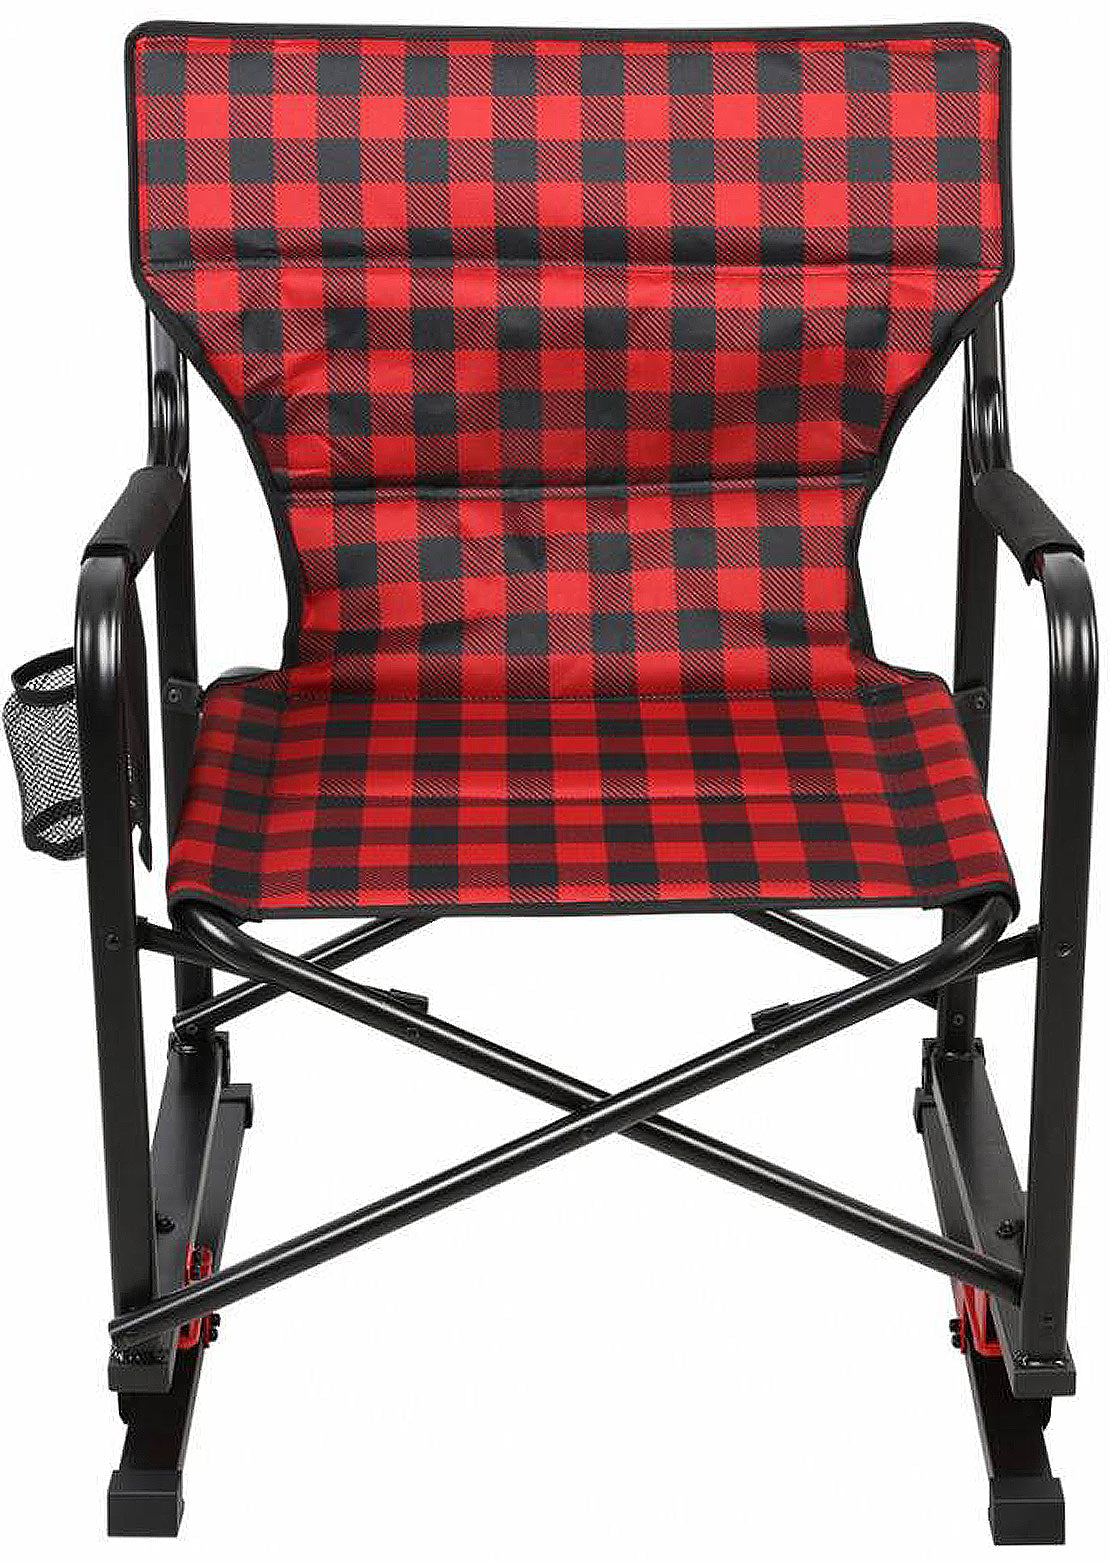 Kuma Outdoor Gear Spring Bear Chair - Quad Fold Red/Black